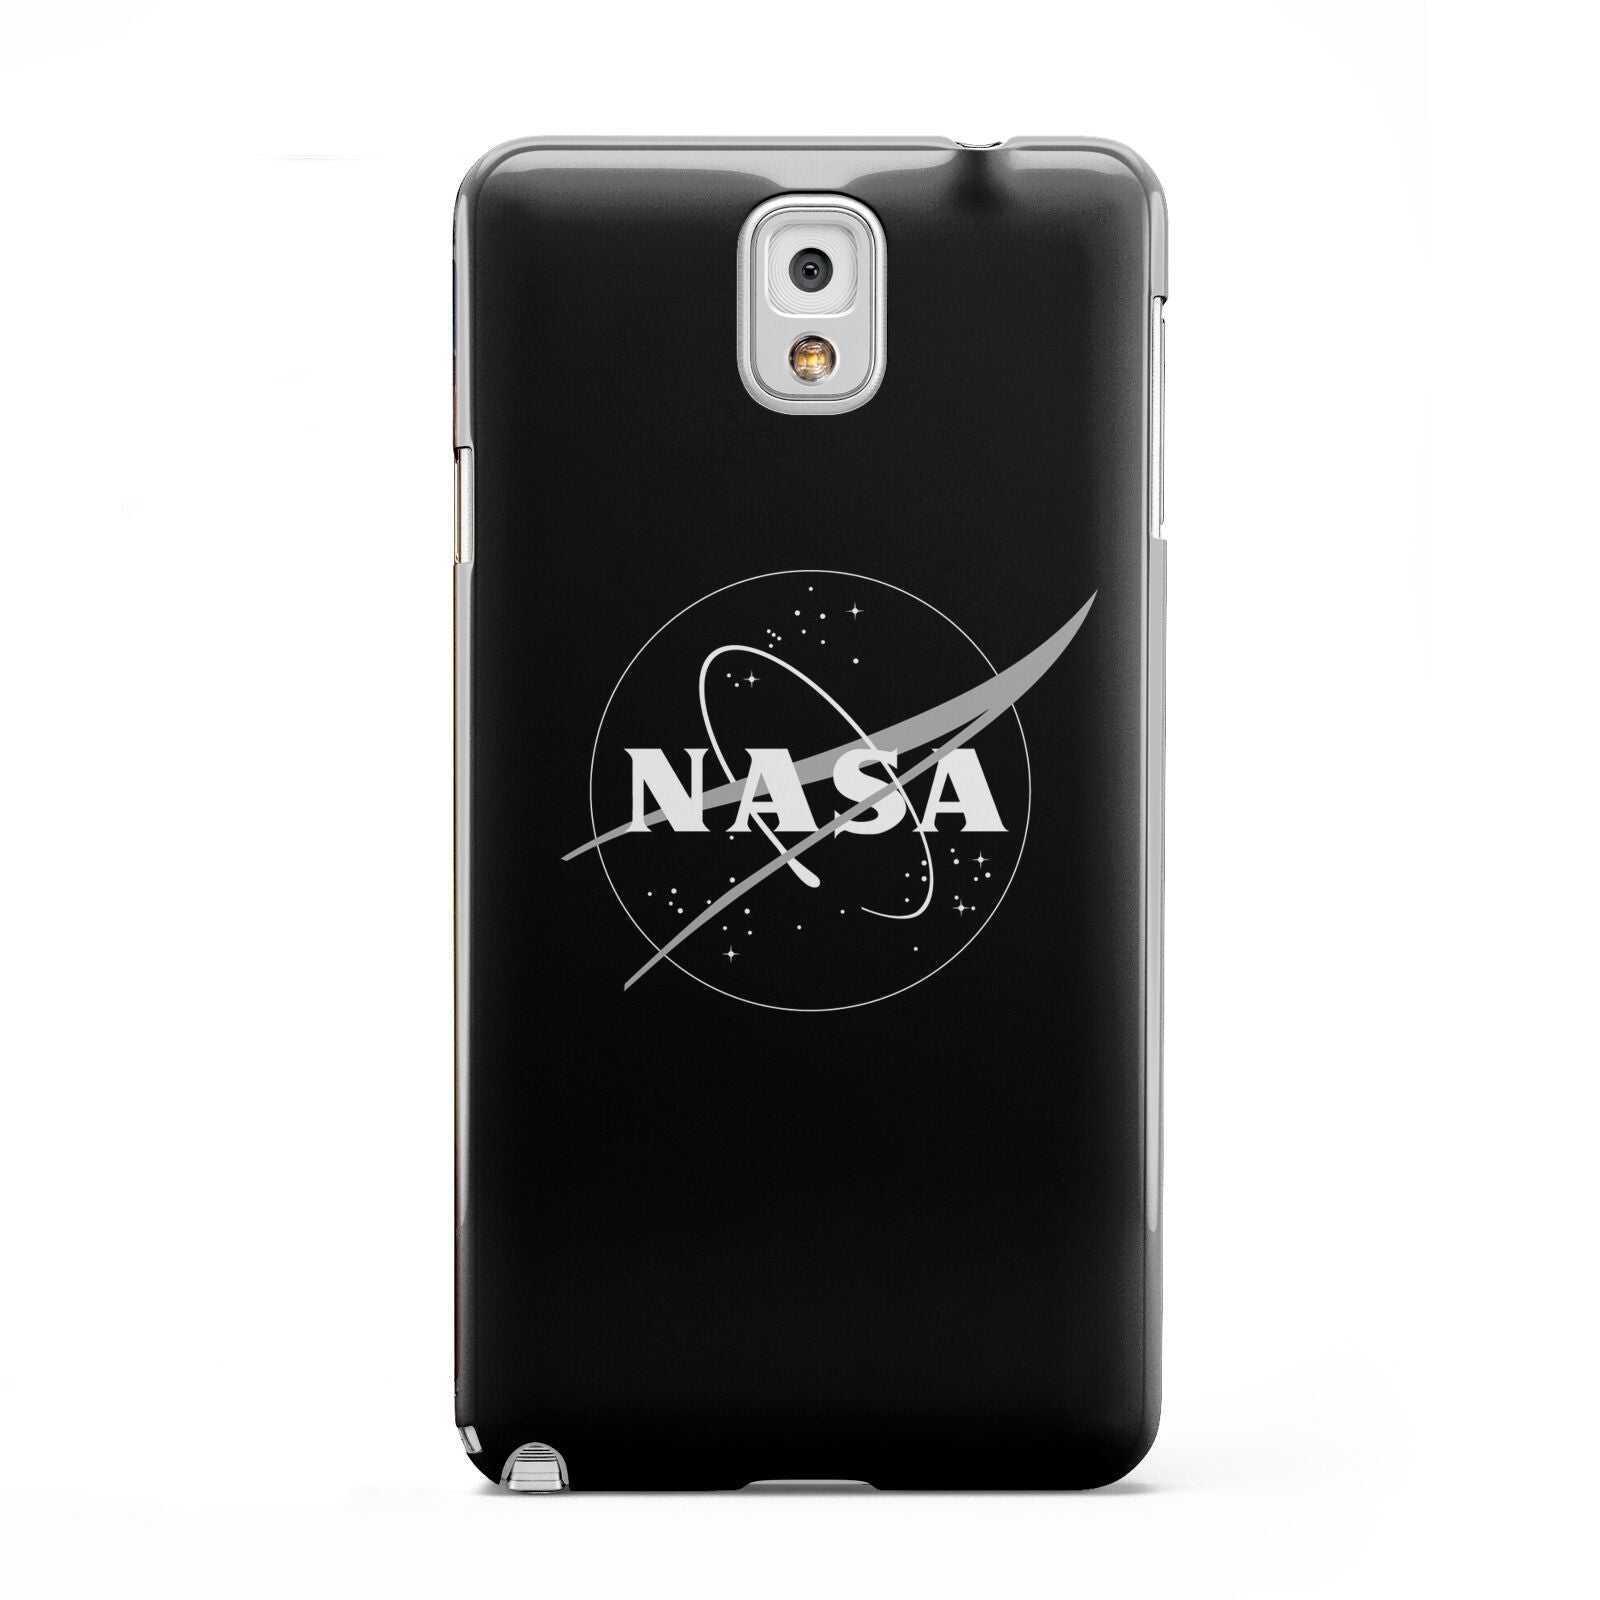 Black NASA Meatball Samsung Galaxy Note 3 Case